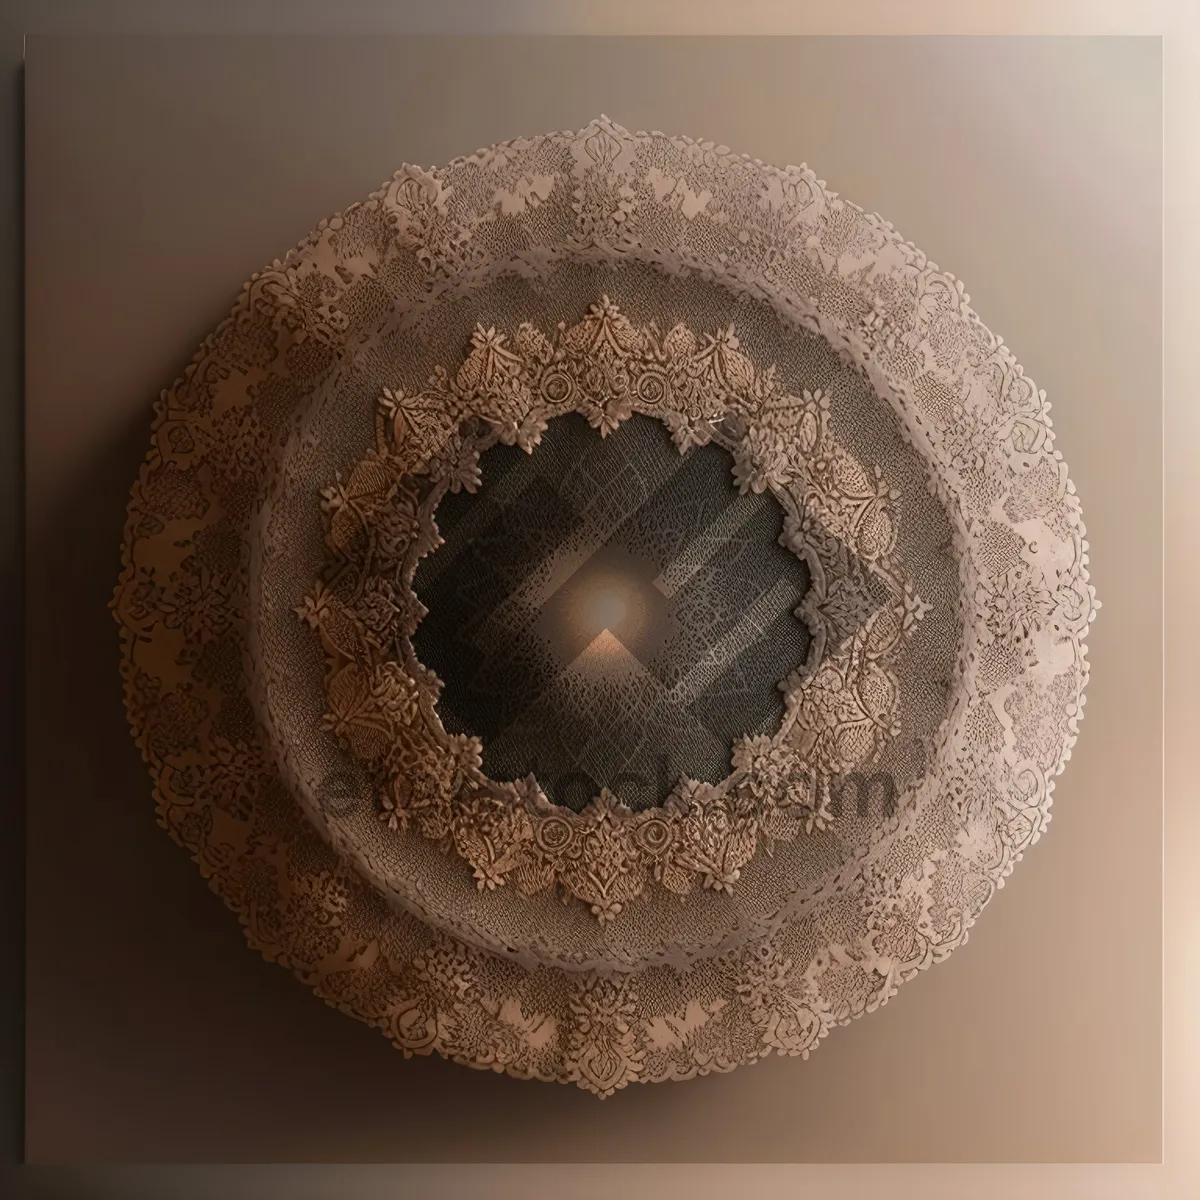 Picture of Elegant Gong-shaped Chandelier: A Harmonious Décor Masterpiece